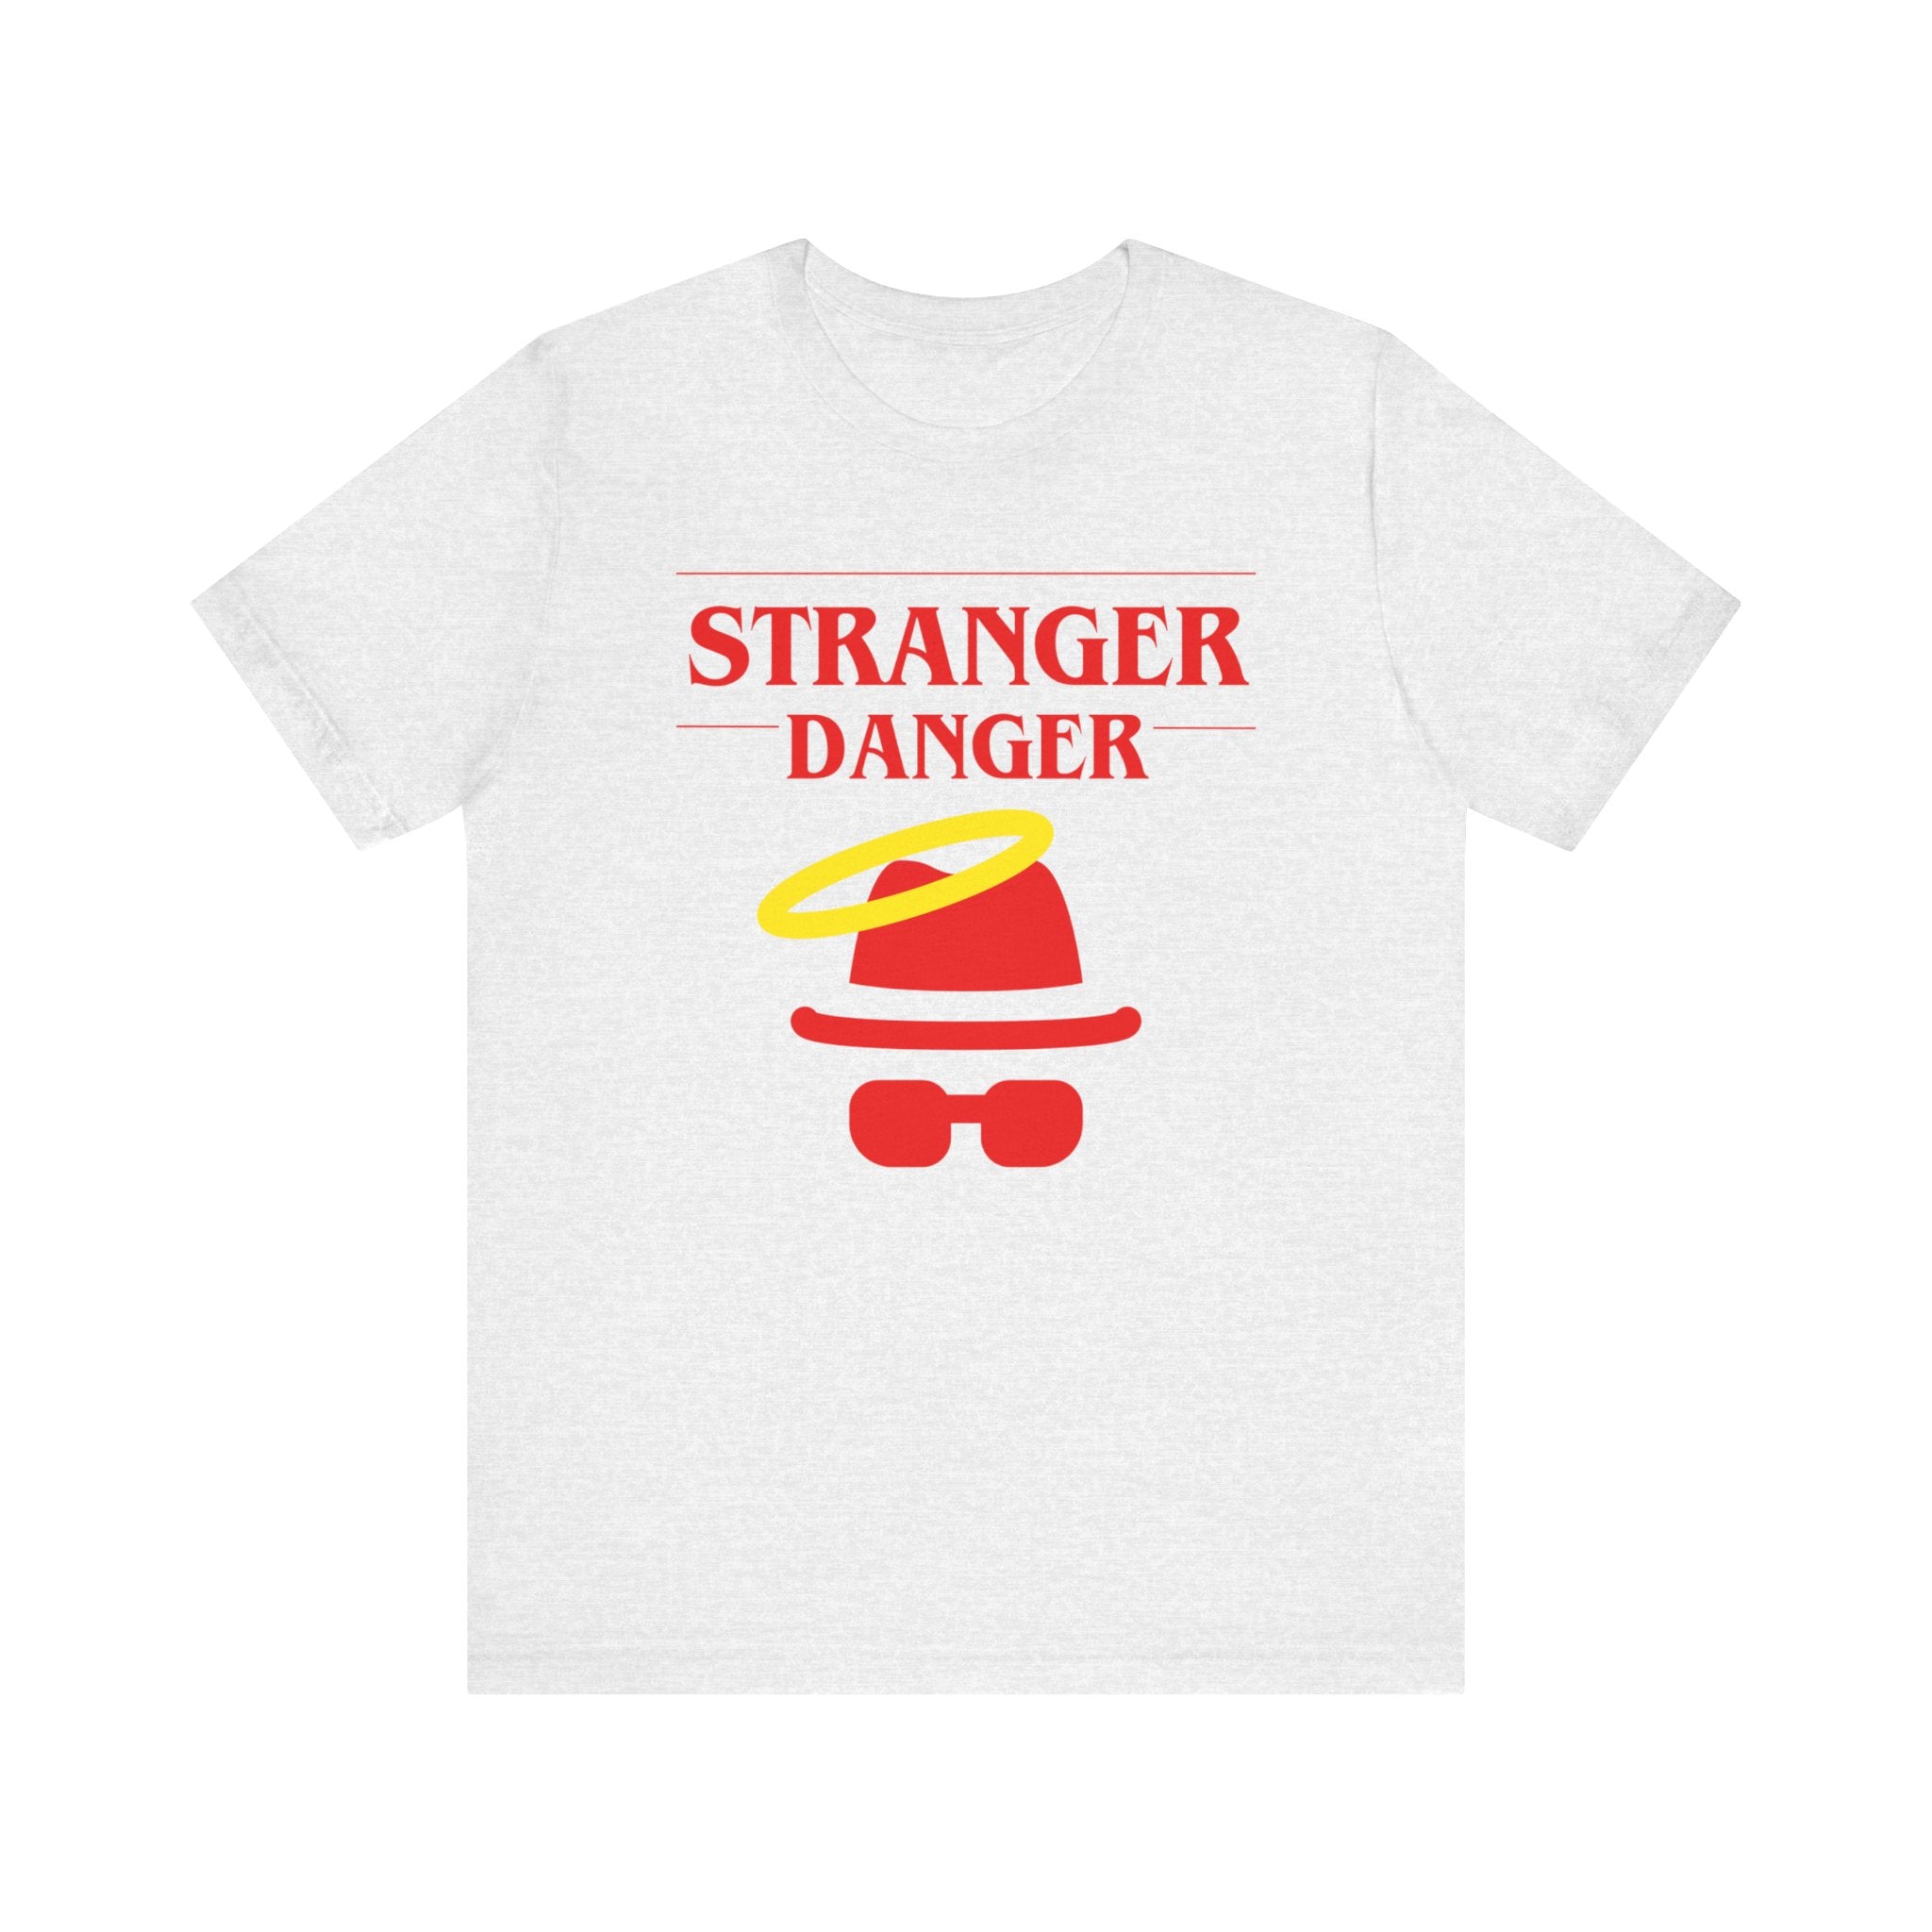 FURDreams “Stranger” II Unisex Jersey Short Sleeve Tee